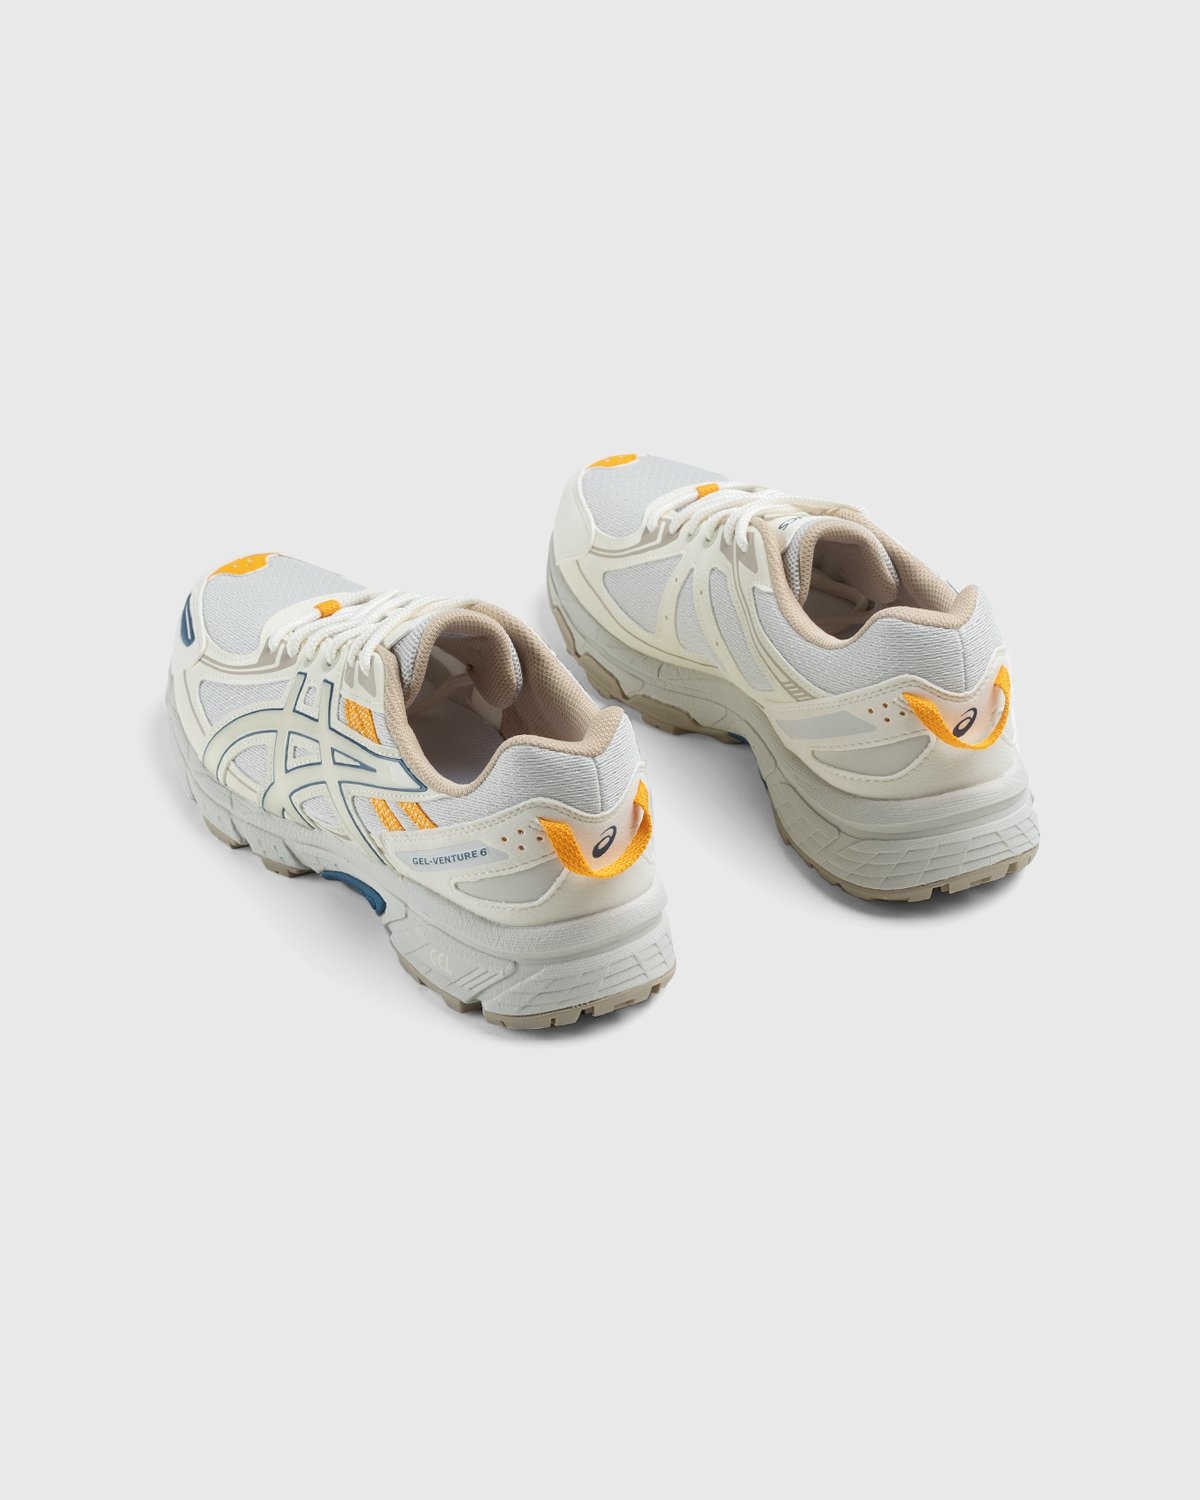 asics – Gel-Venture 6 Smoke Grey Birch - Low Top Sneakers - White - Image 4